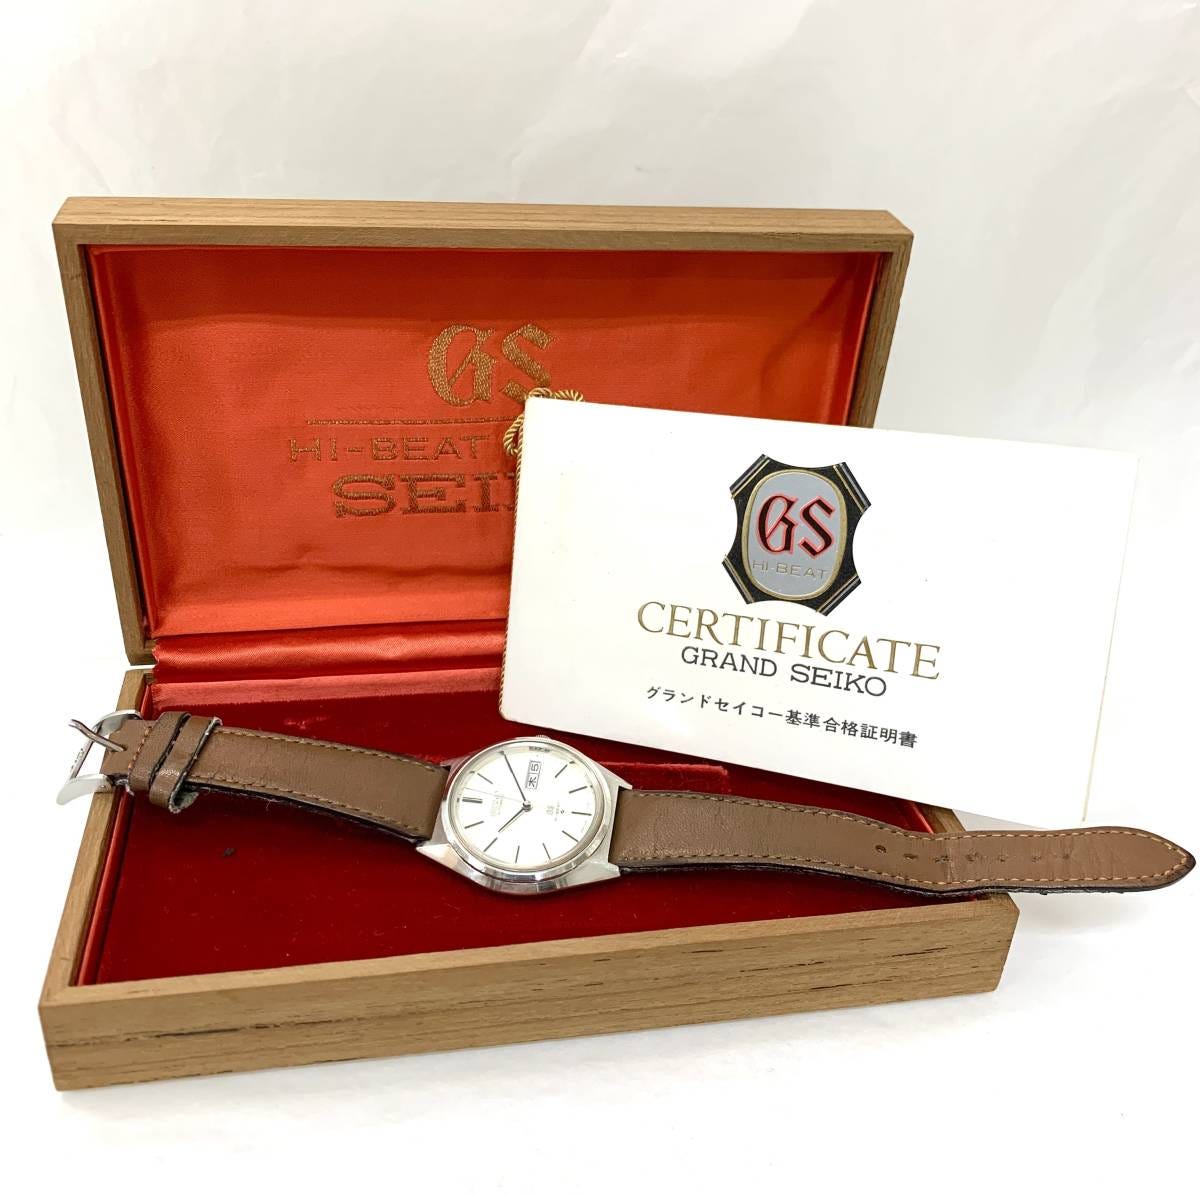 SEIKO GRANDSEIKO HI-BEAT 5646-7010 デイデイト 自動巻き 腕時計 グランドセイコー 